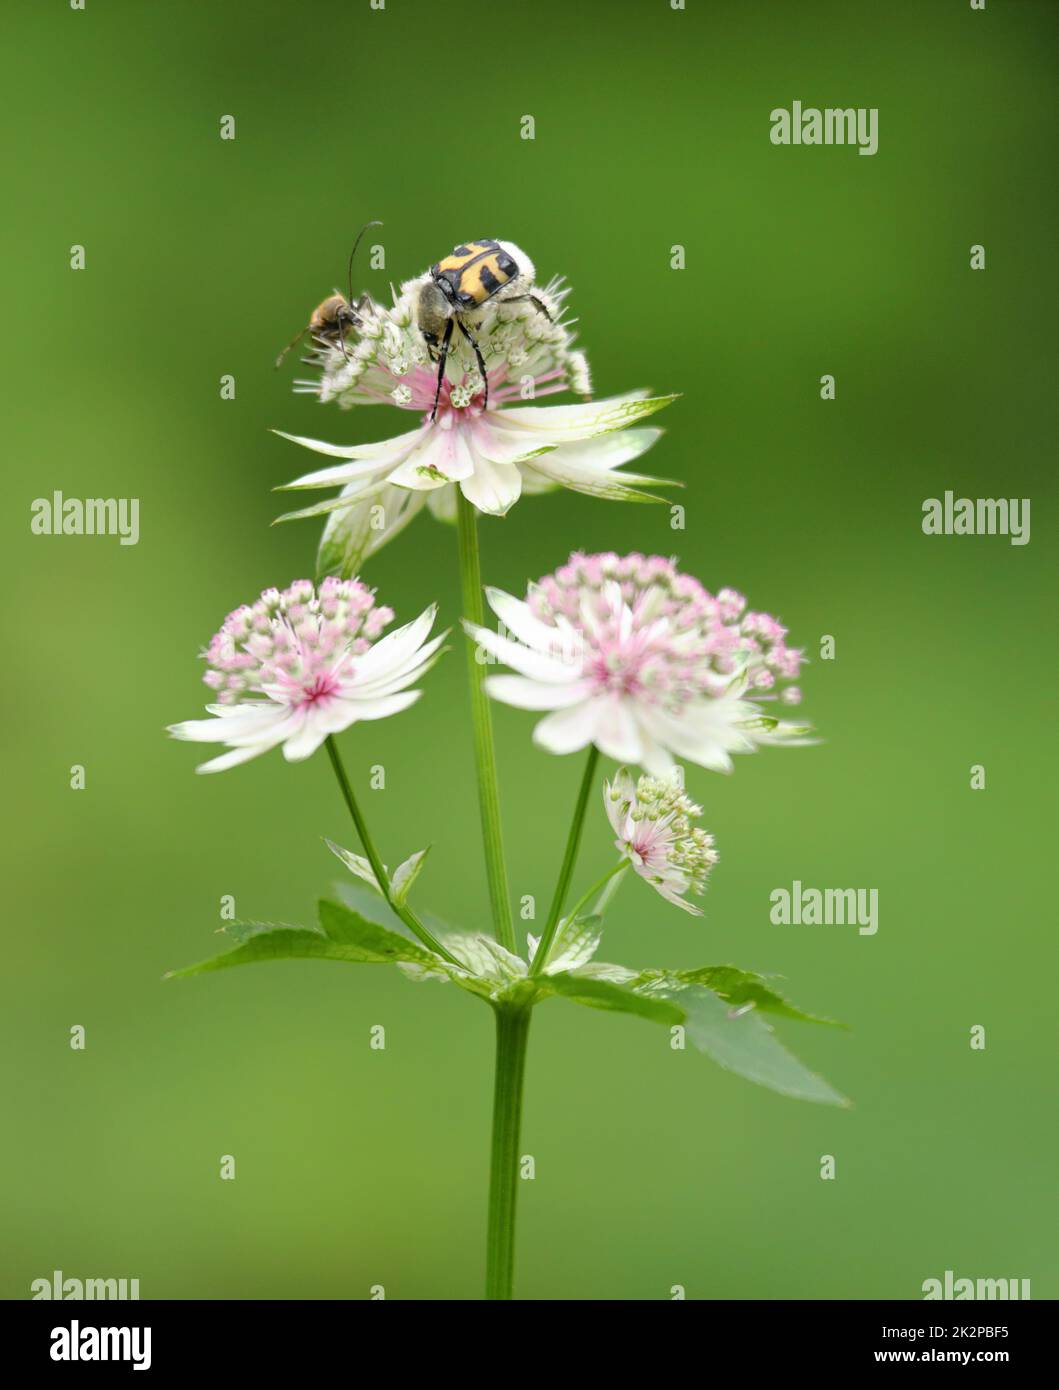 Eurasian bee beetle Trichius fasciatus on the flower of Astrantia major, the great masterwort Stock Photo